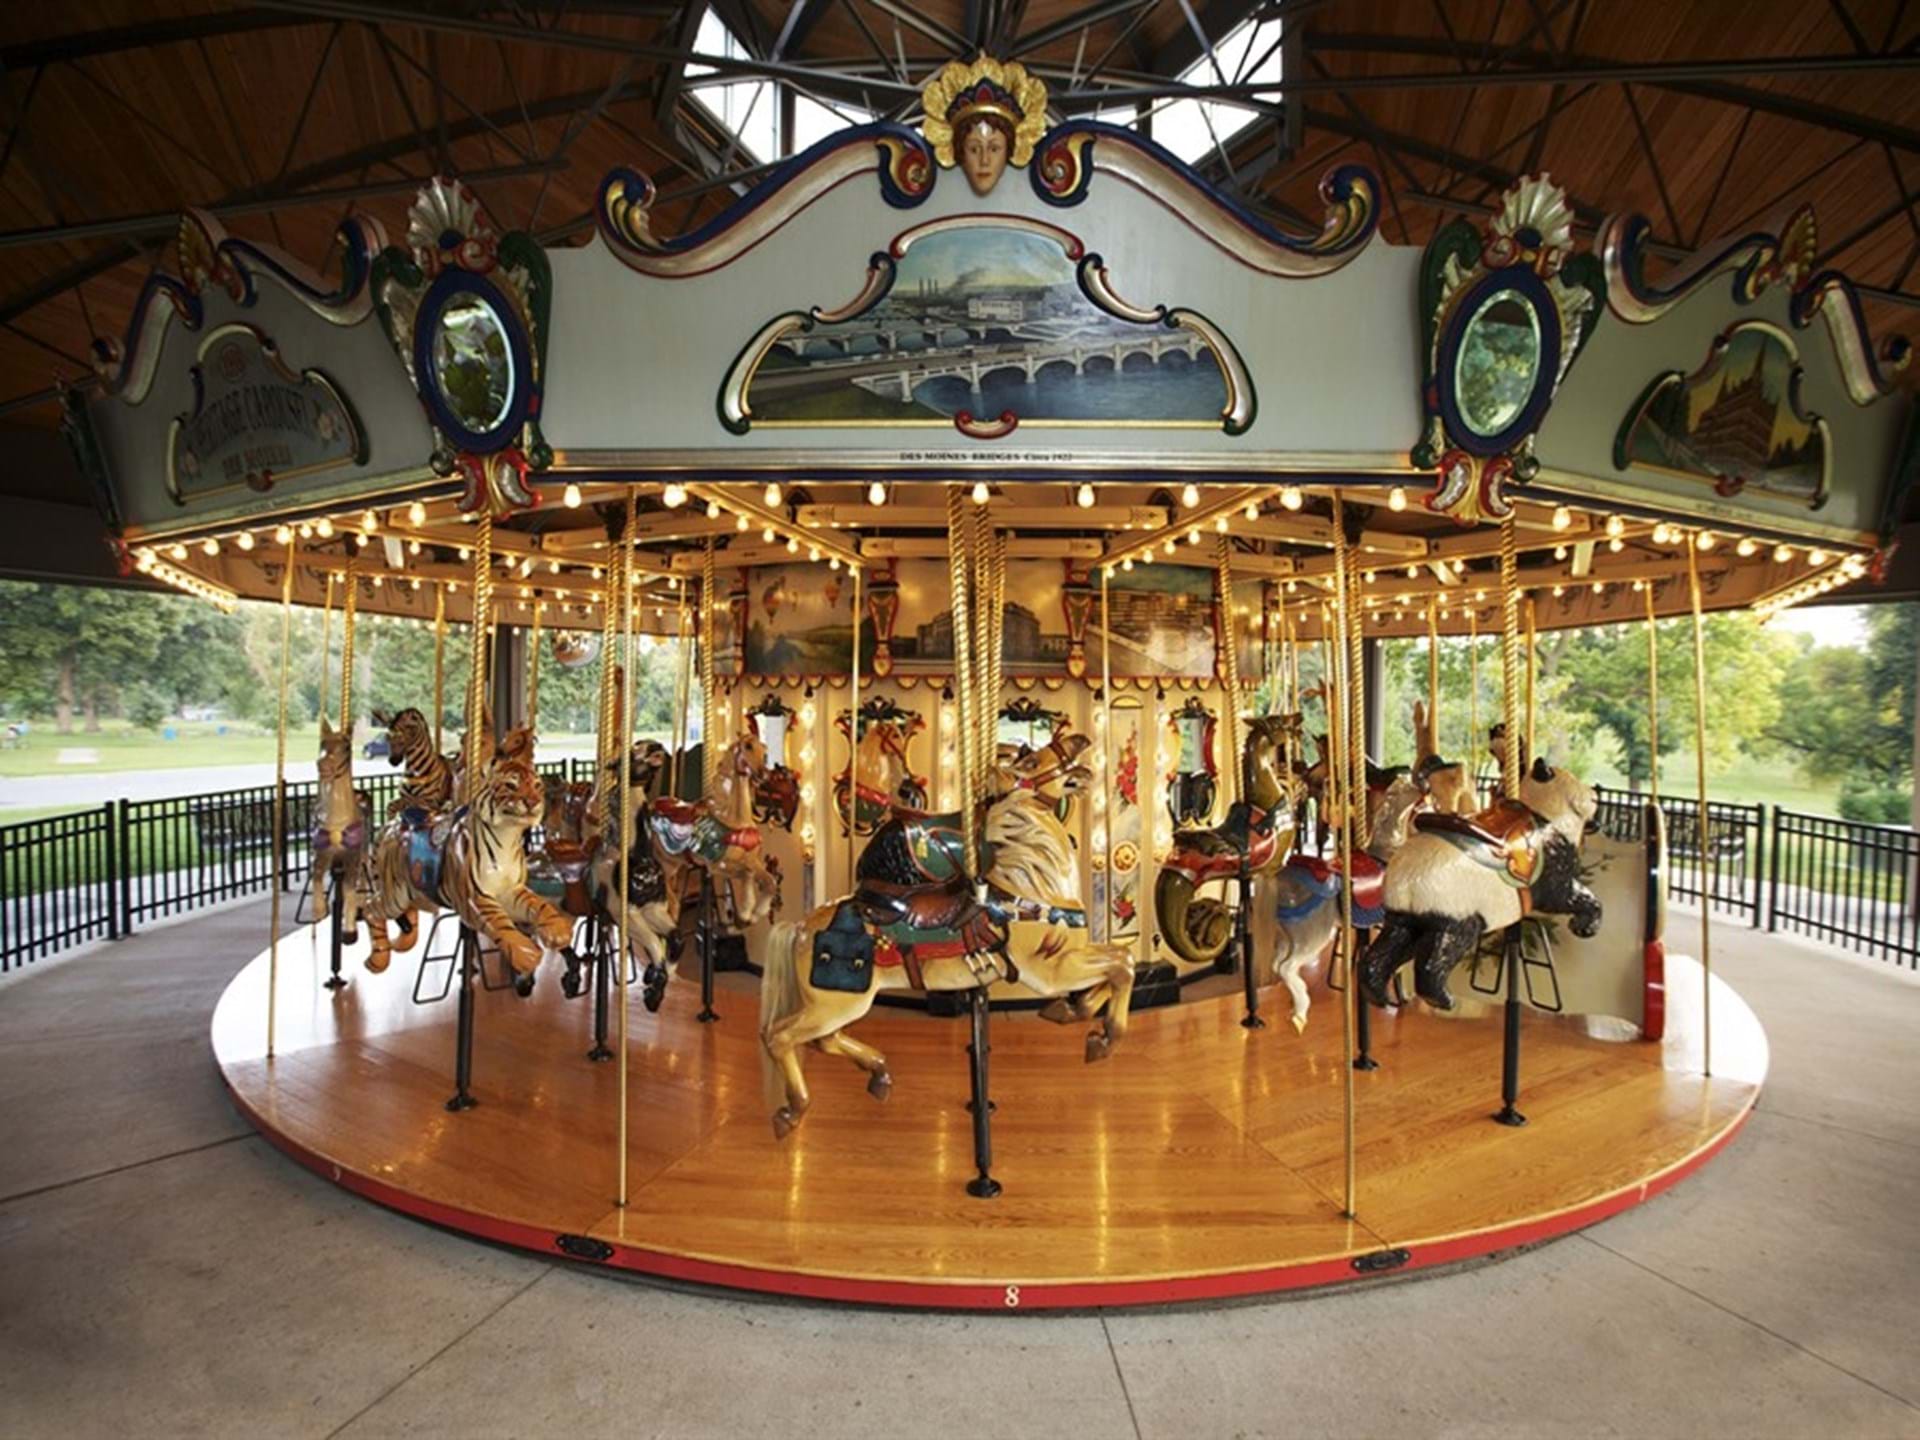 Heritage Carousel in Union Park